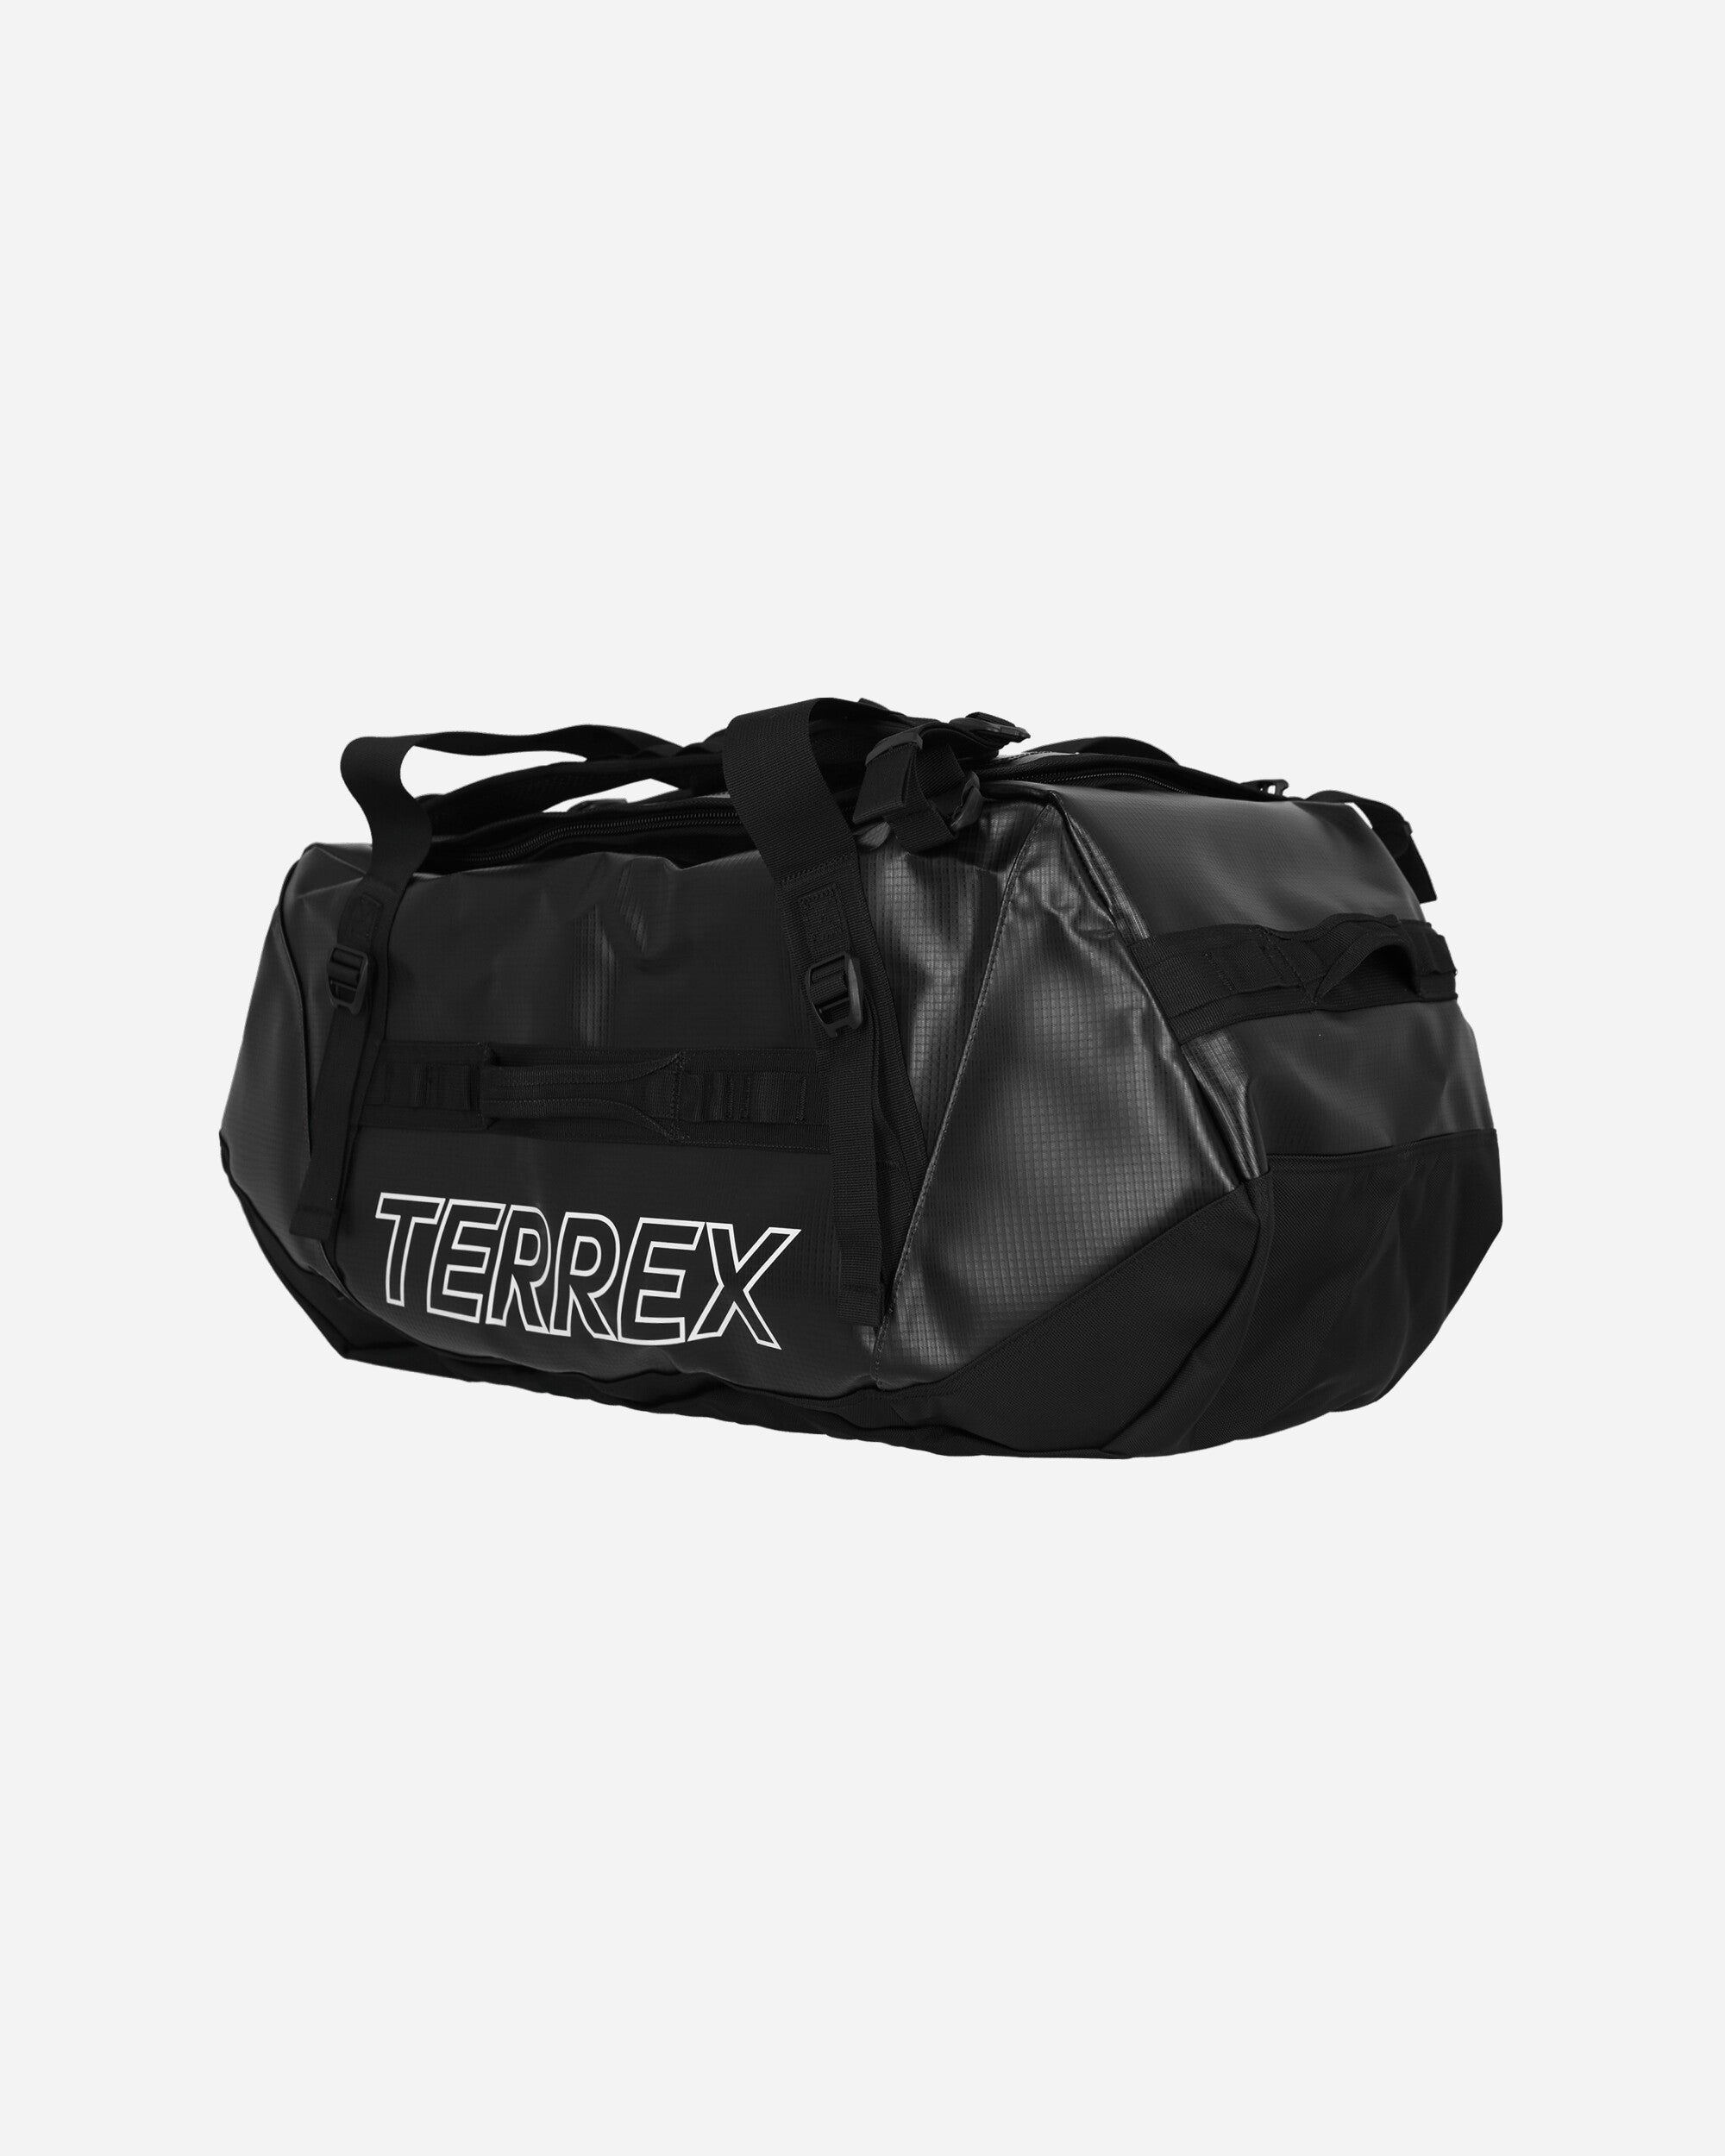 TERREX Expedition Duffel Bag Large Black - 3